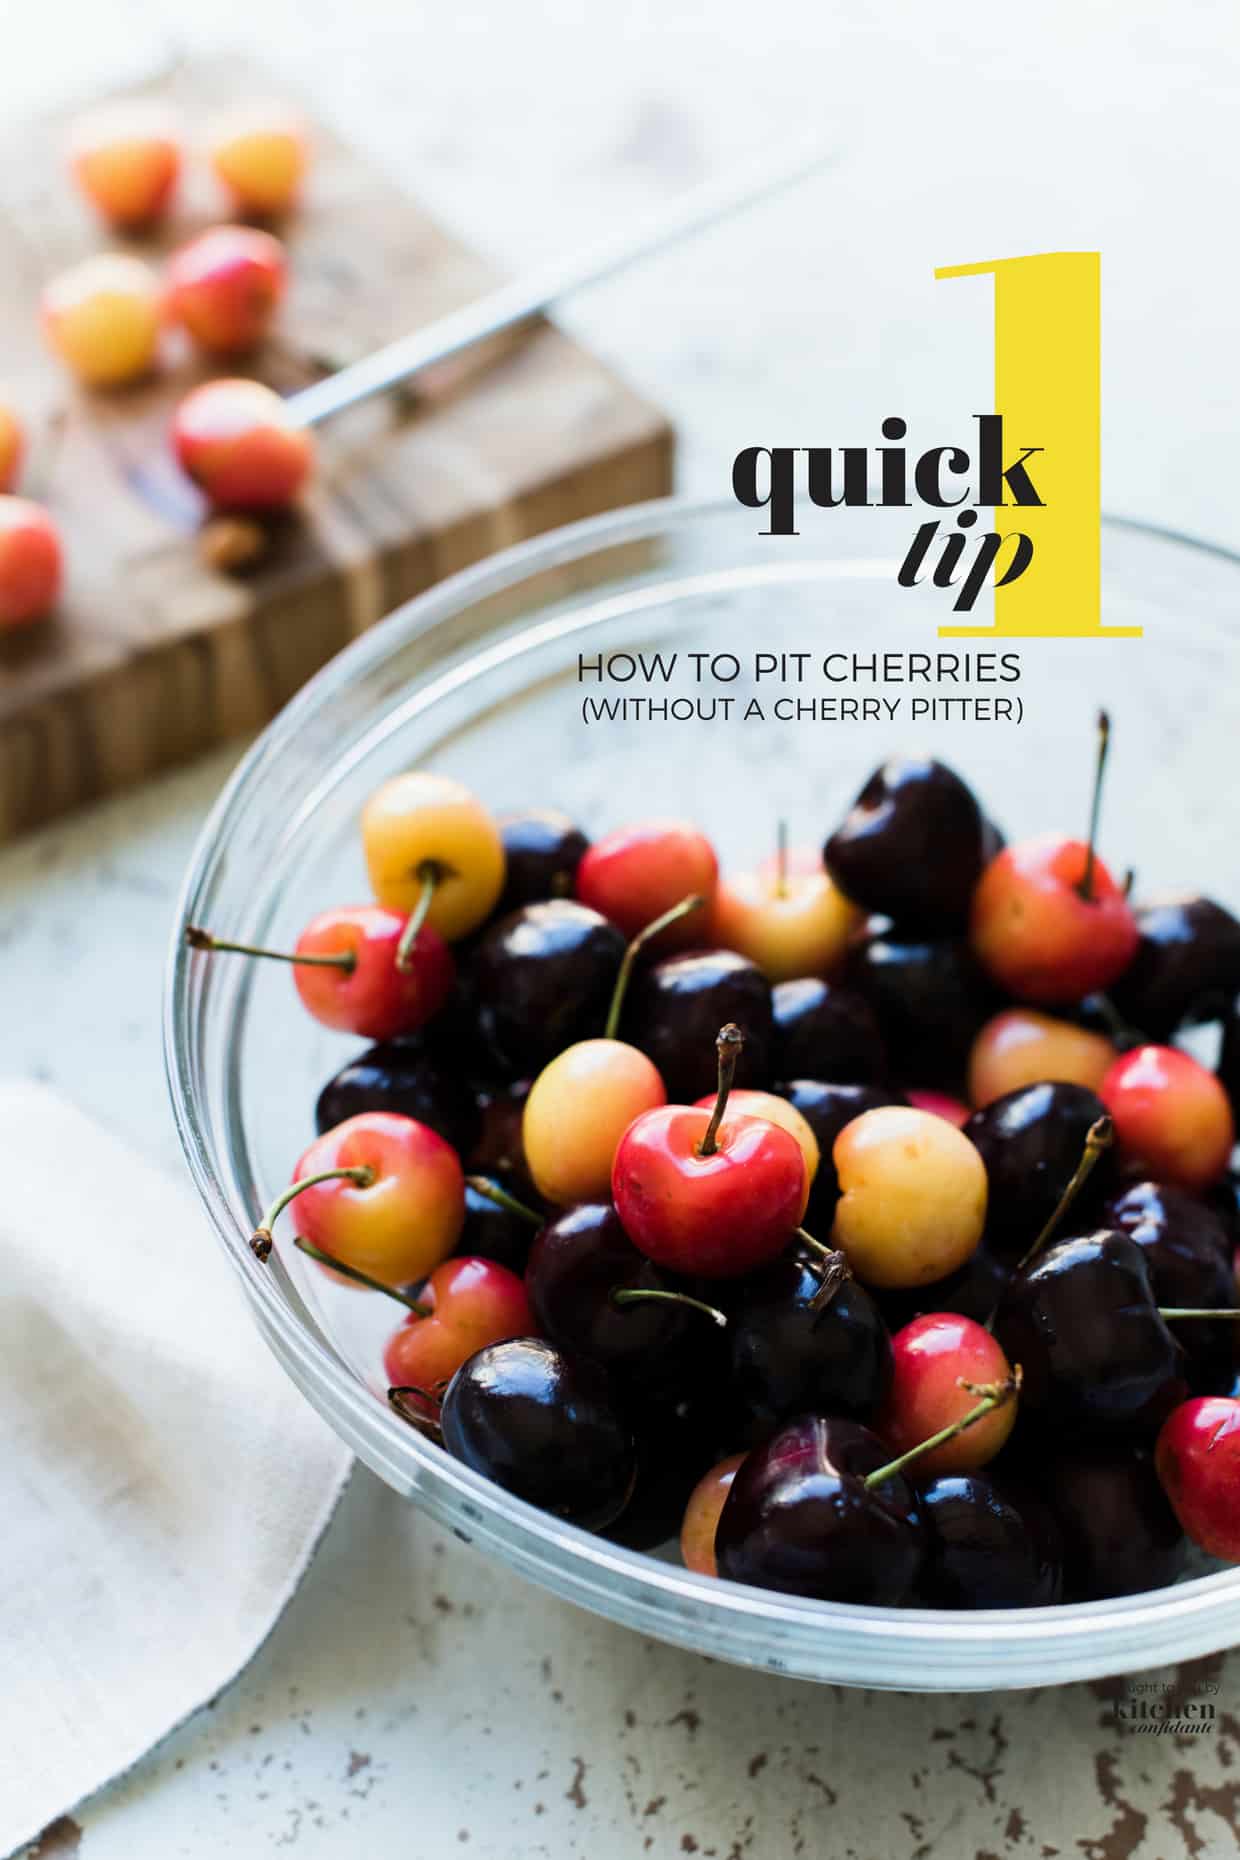 https://kitchenconfidante.com/wp-content/uploads/2018/05/How-to-Pit-Cherries-One-Quick-Tip.jpg